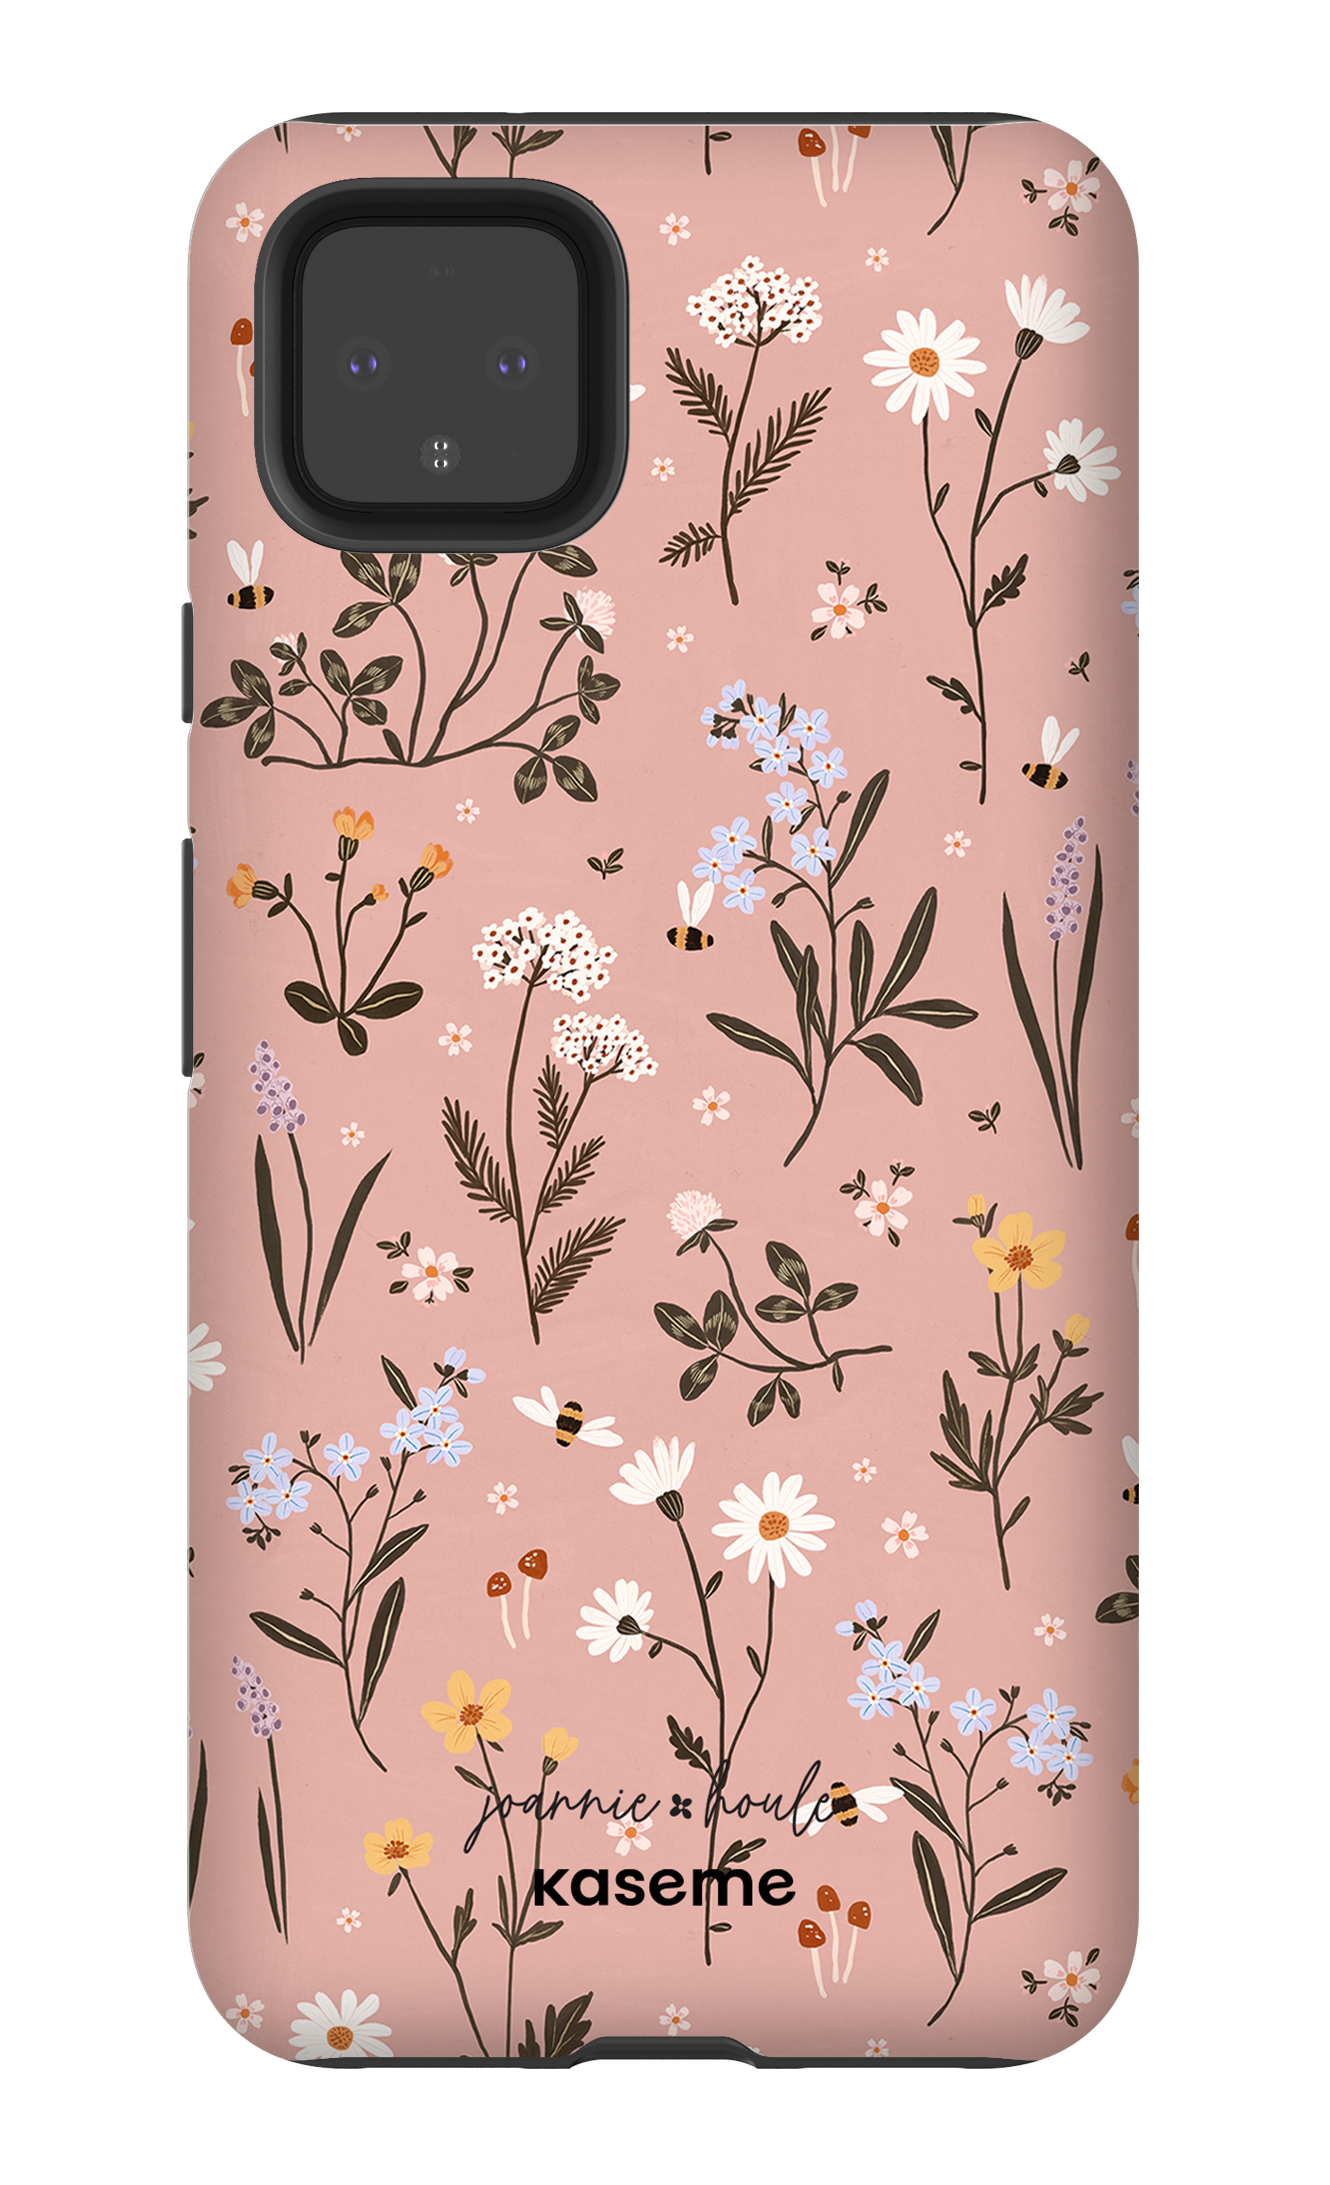 Spring Garden Pink by Joannie Houle - Google Pixel 4 XL